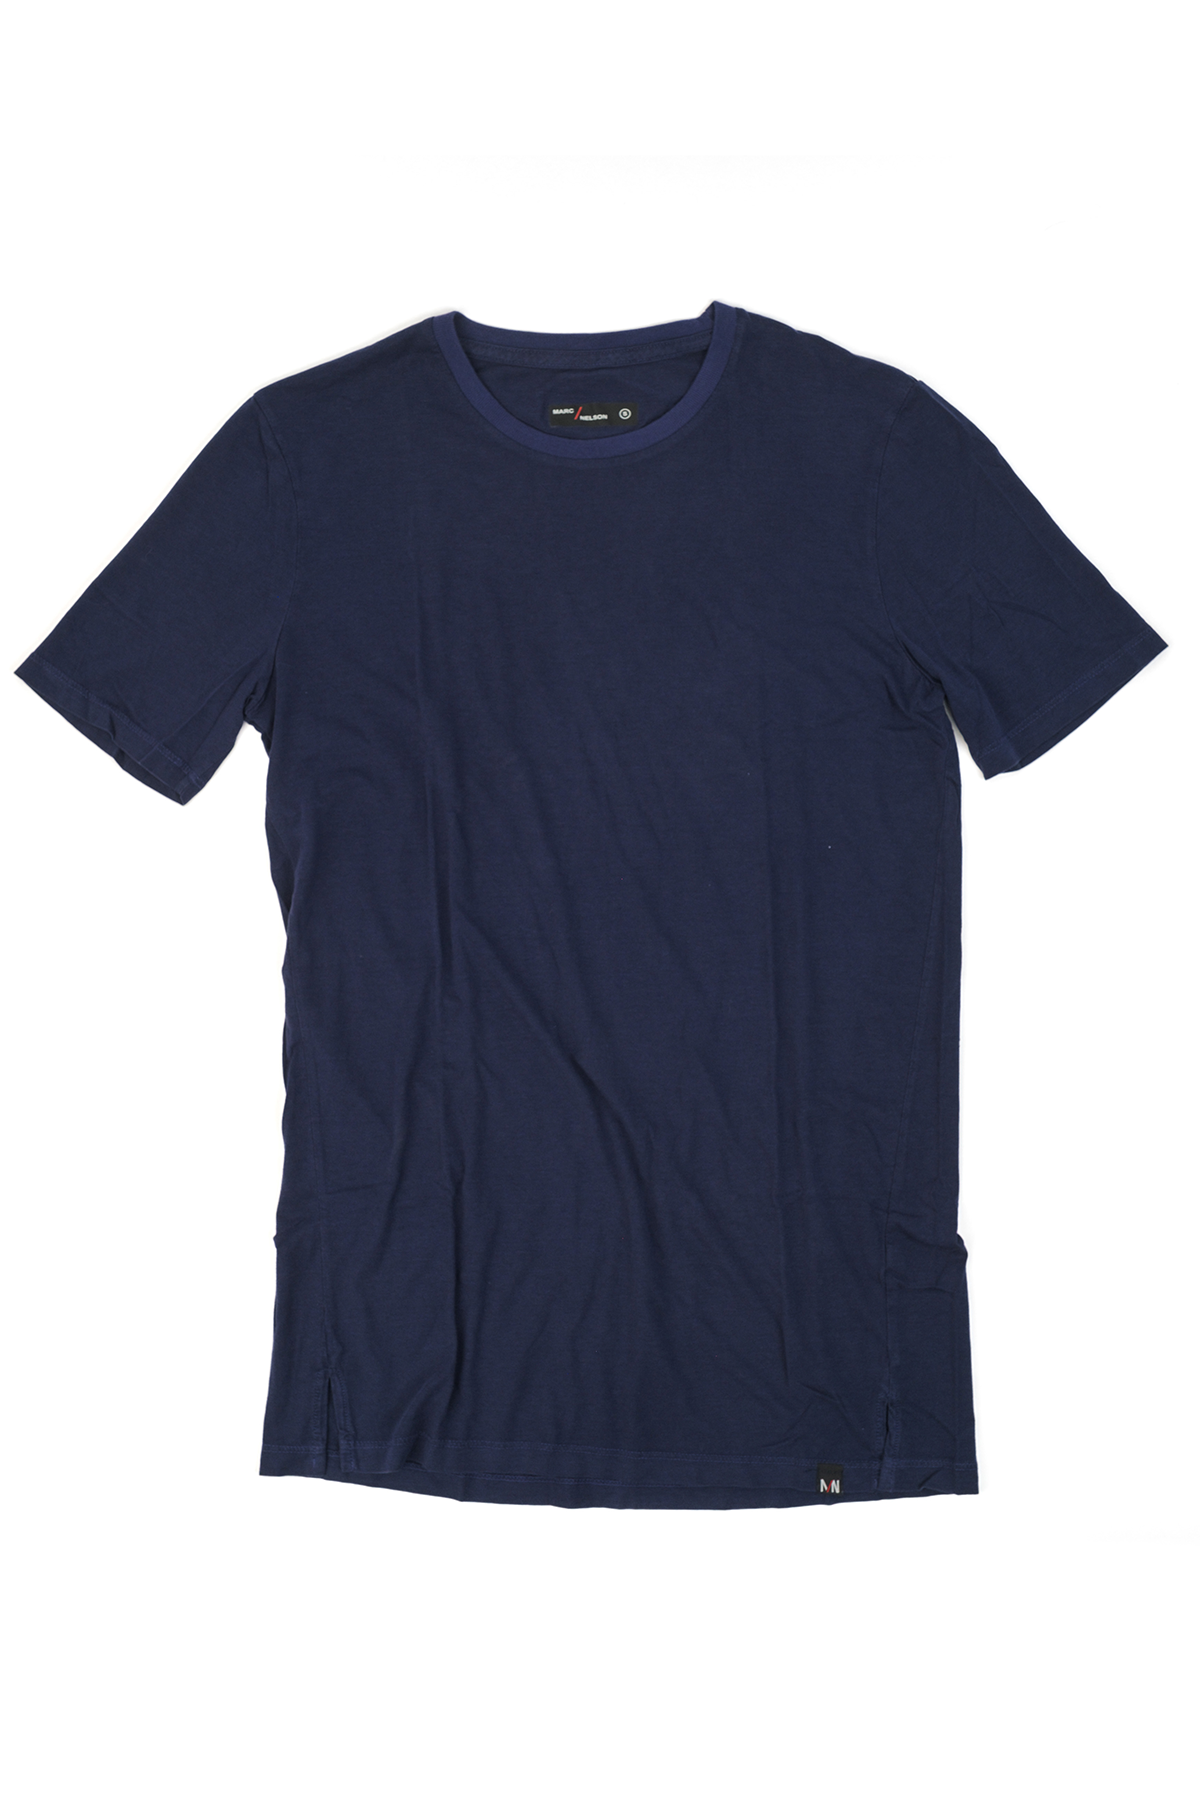 Overhead photo of Navy Modal Cotton Short Sleeve Crewneck T-Shirt